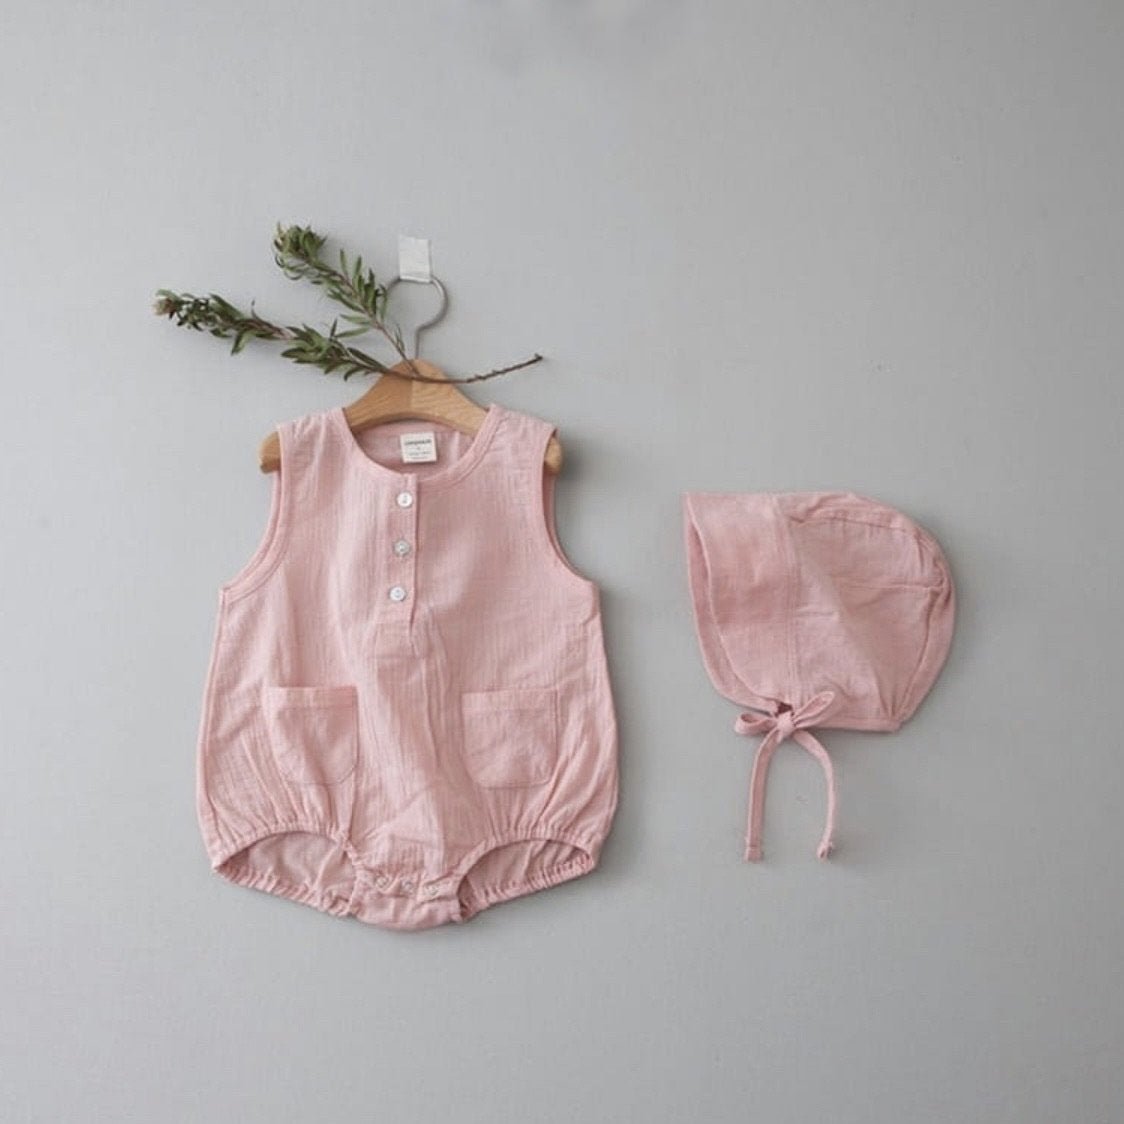 Simple Bodysuit mit Mütze find Stylish Fashion for Little People- at Little Foxx Concept Store